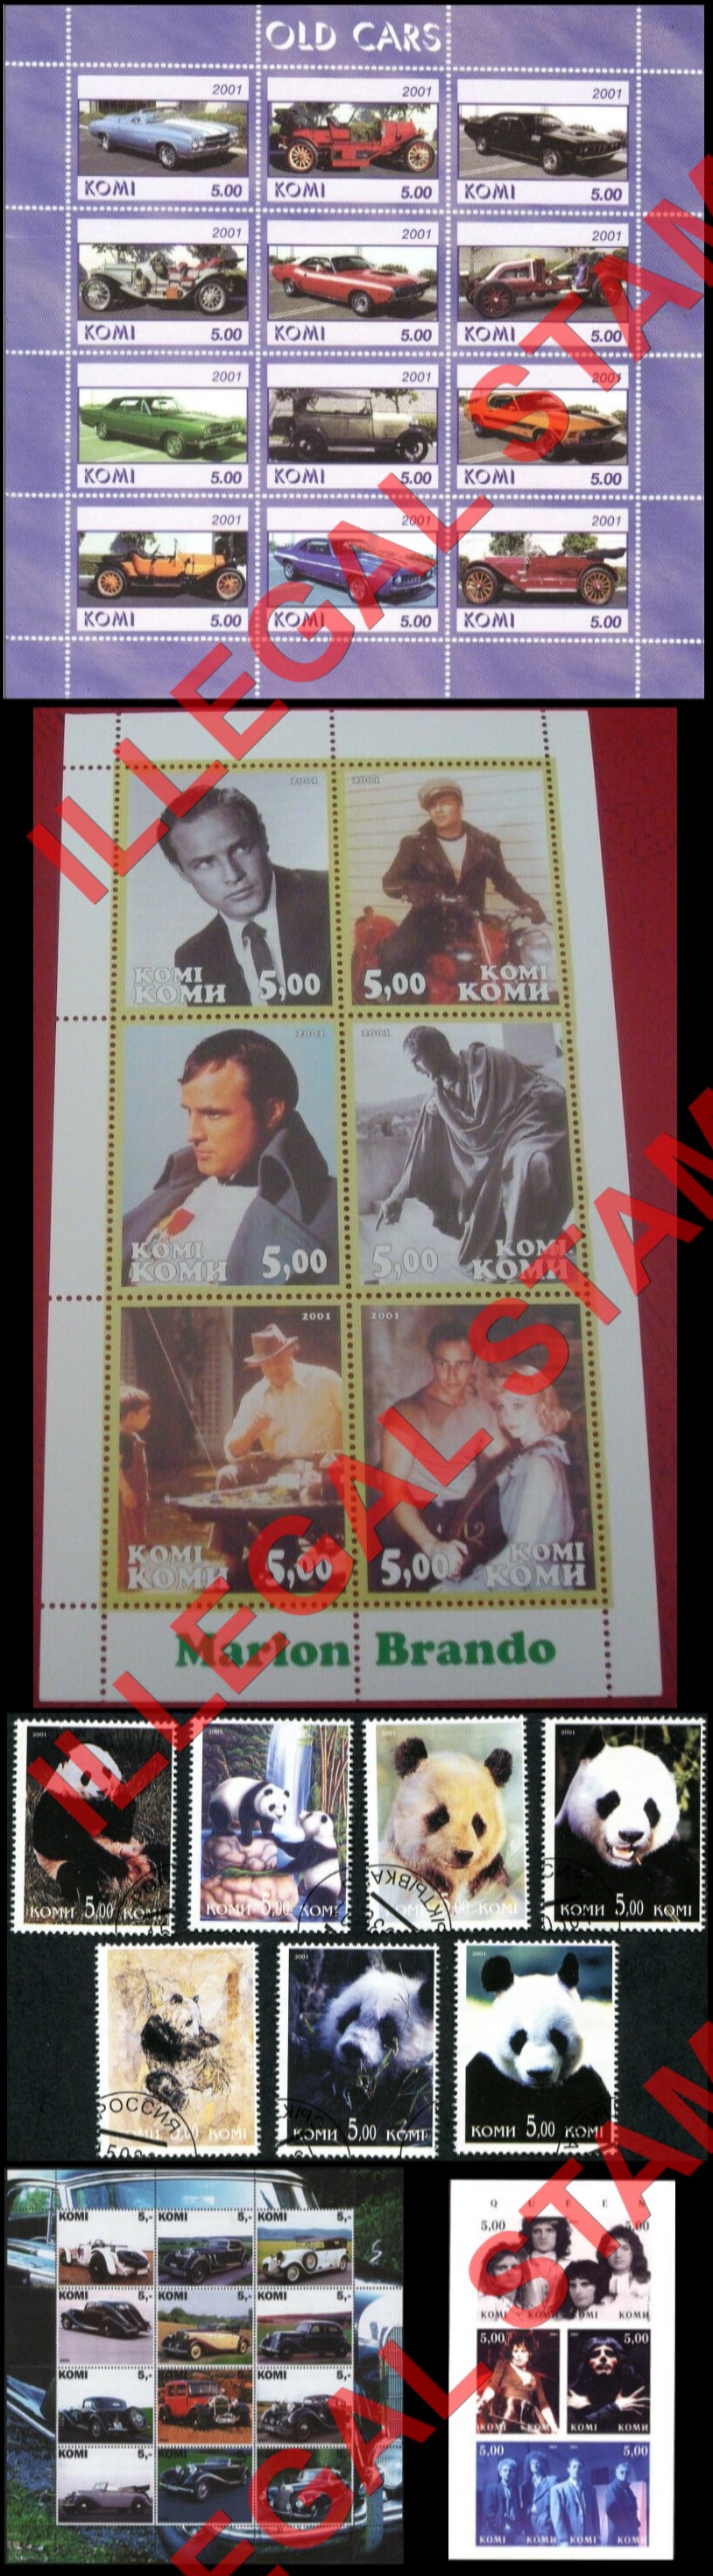 Komi Republic 2001 Counterfeit Illegal Stamps (Part 3)